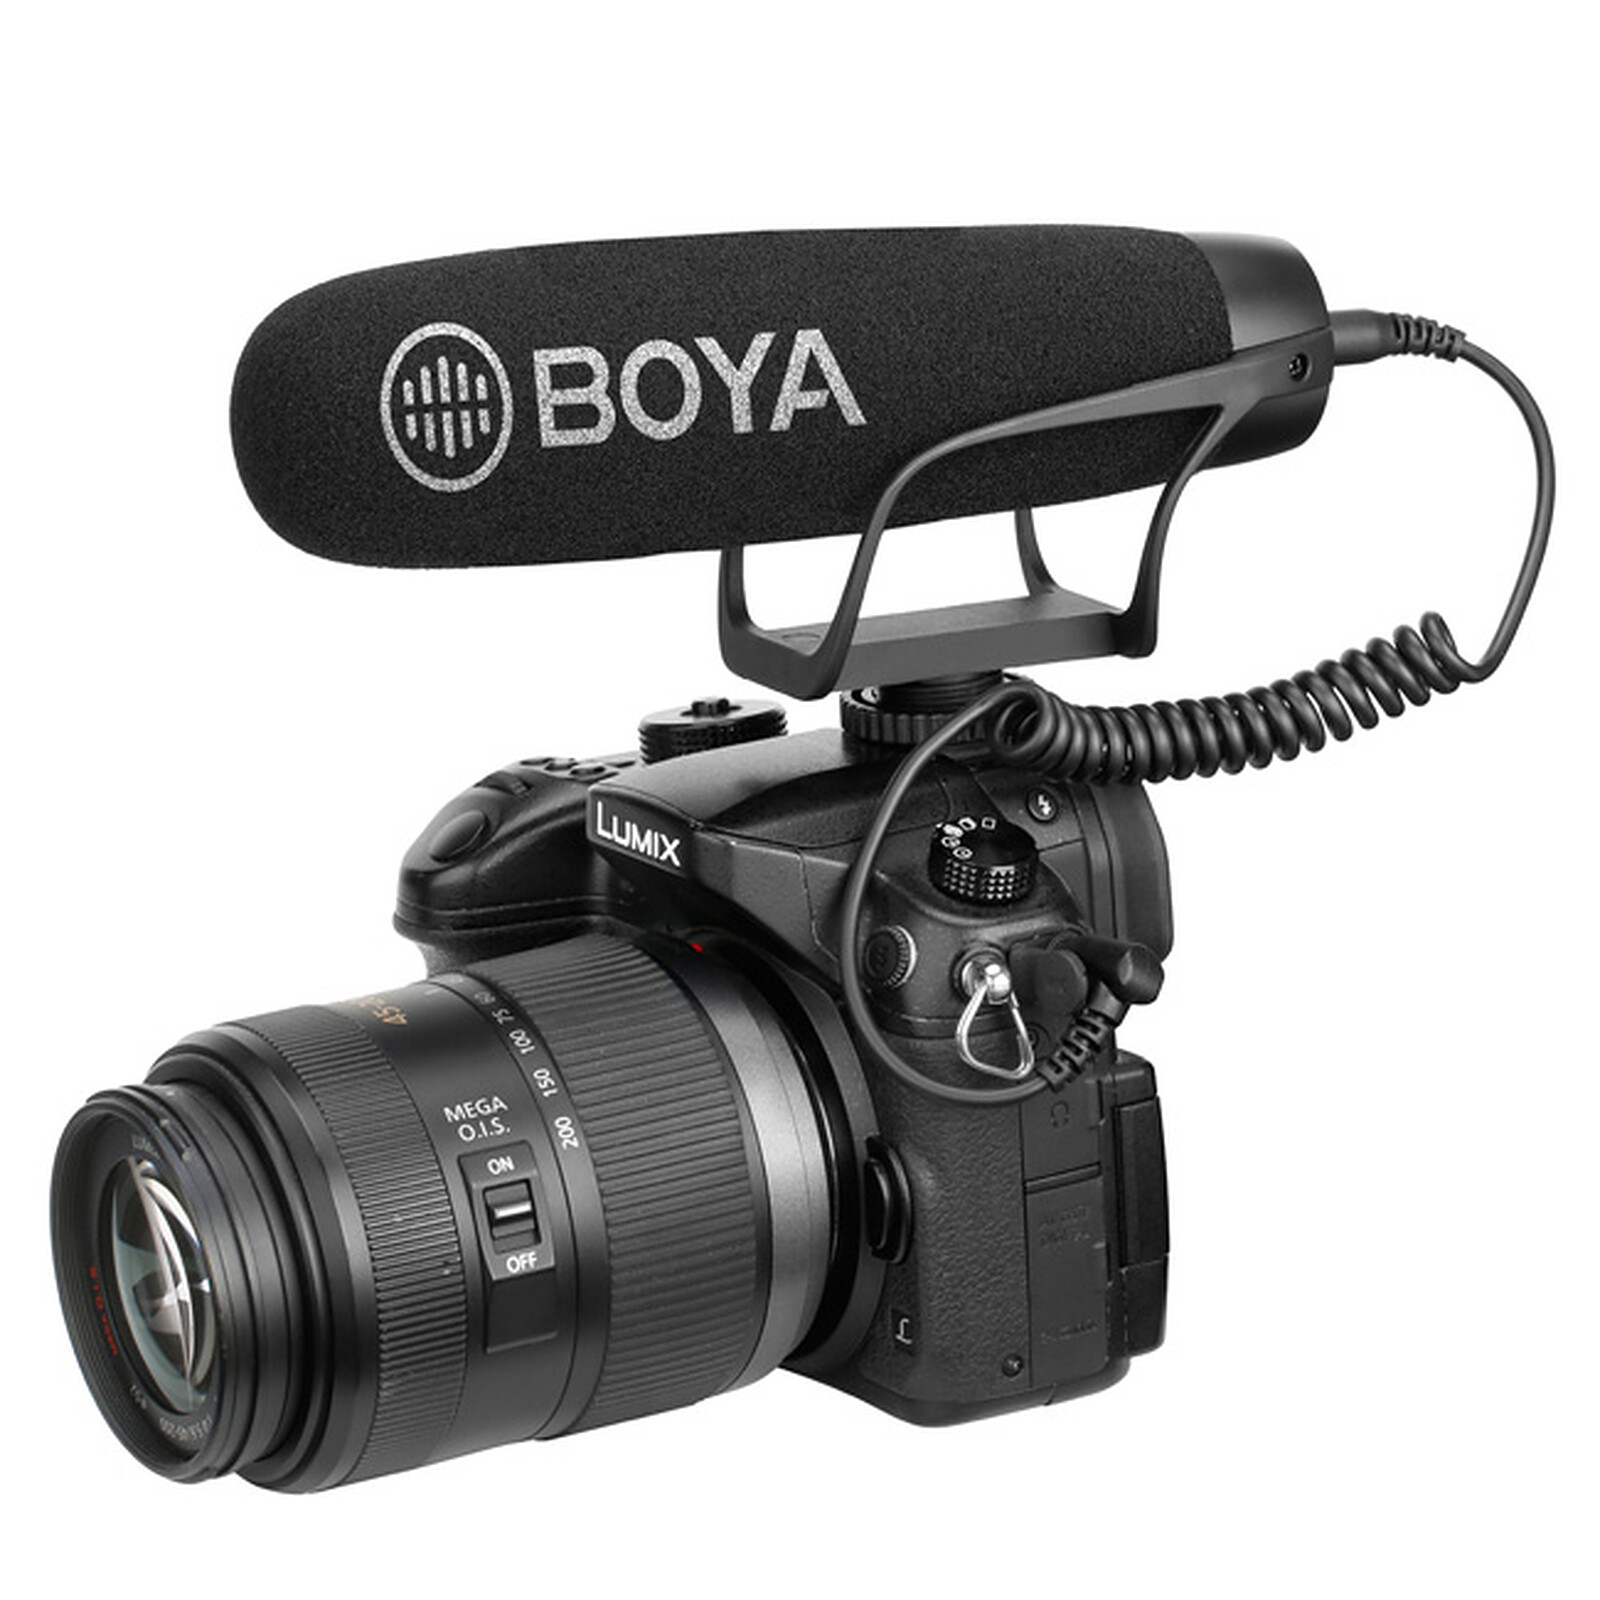 Sony ECM-XYST1M - Micro appareil photo - Garantie 3 ans LDLC